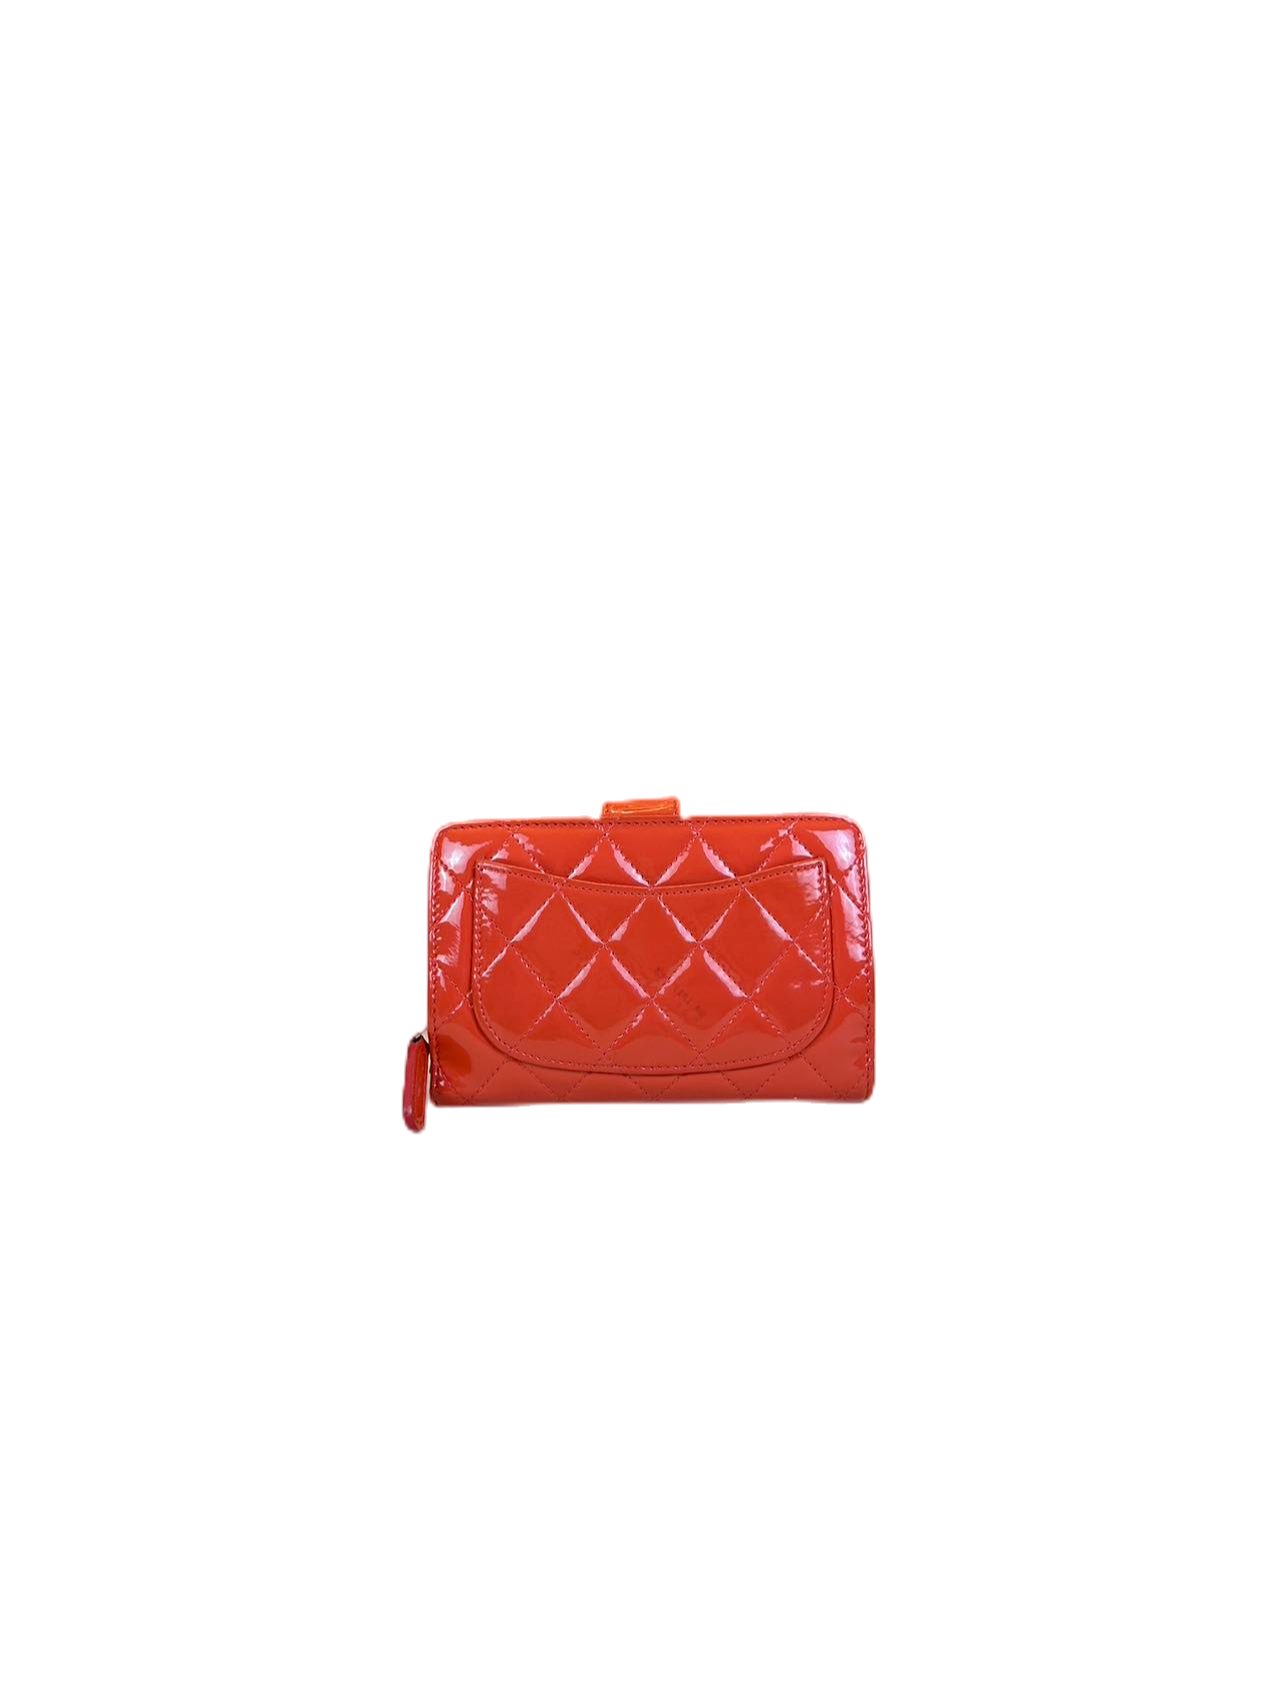 Preloved Chanel Orange Patent Leather Wallet